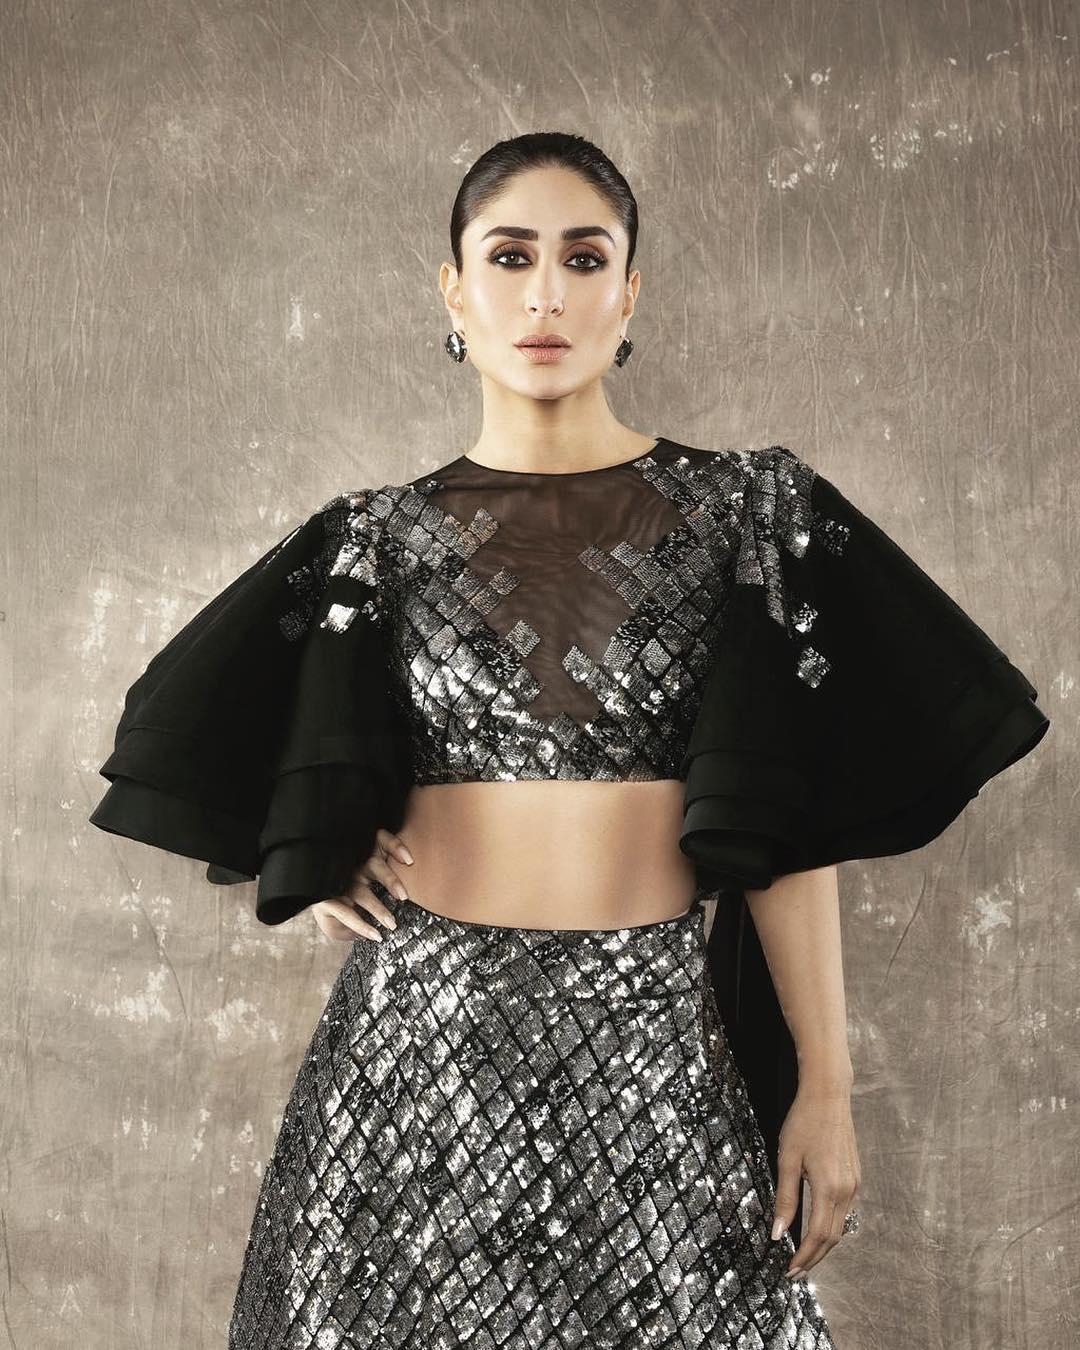 Manish Malhotra pays tribute to Kashmir | Fashion Trends - Hindustan Times